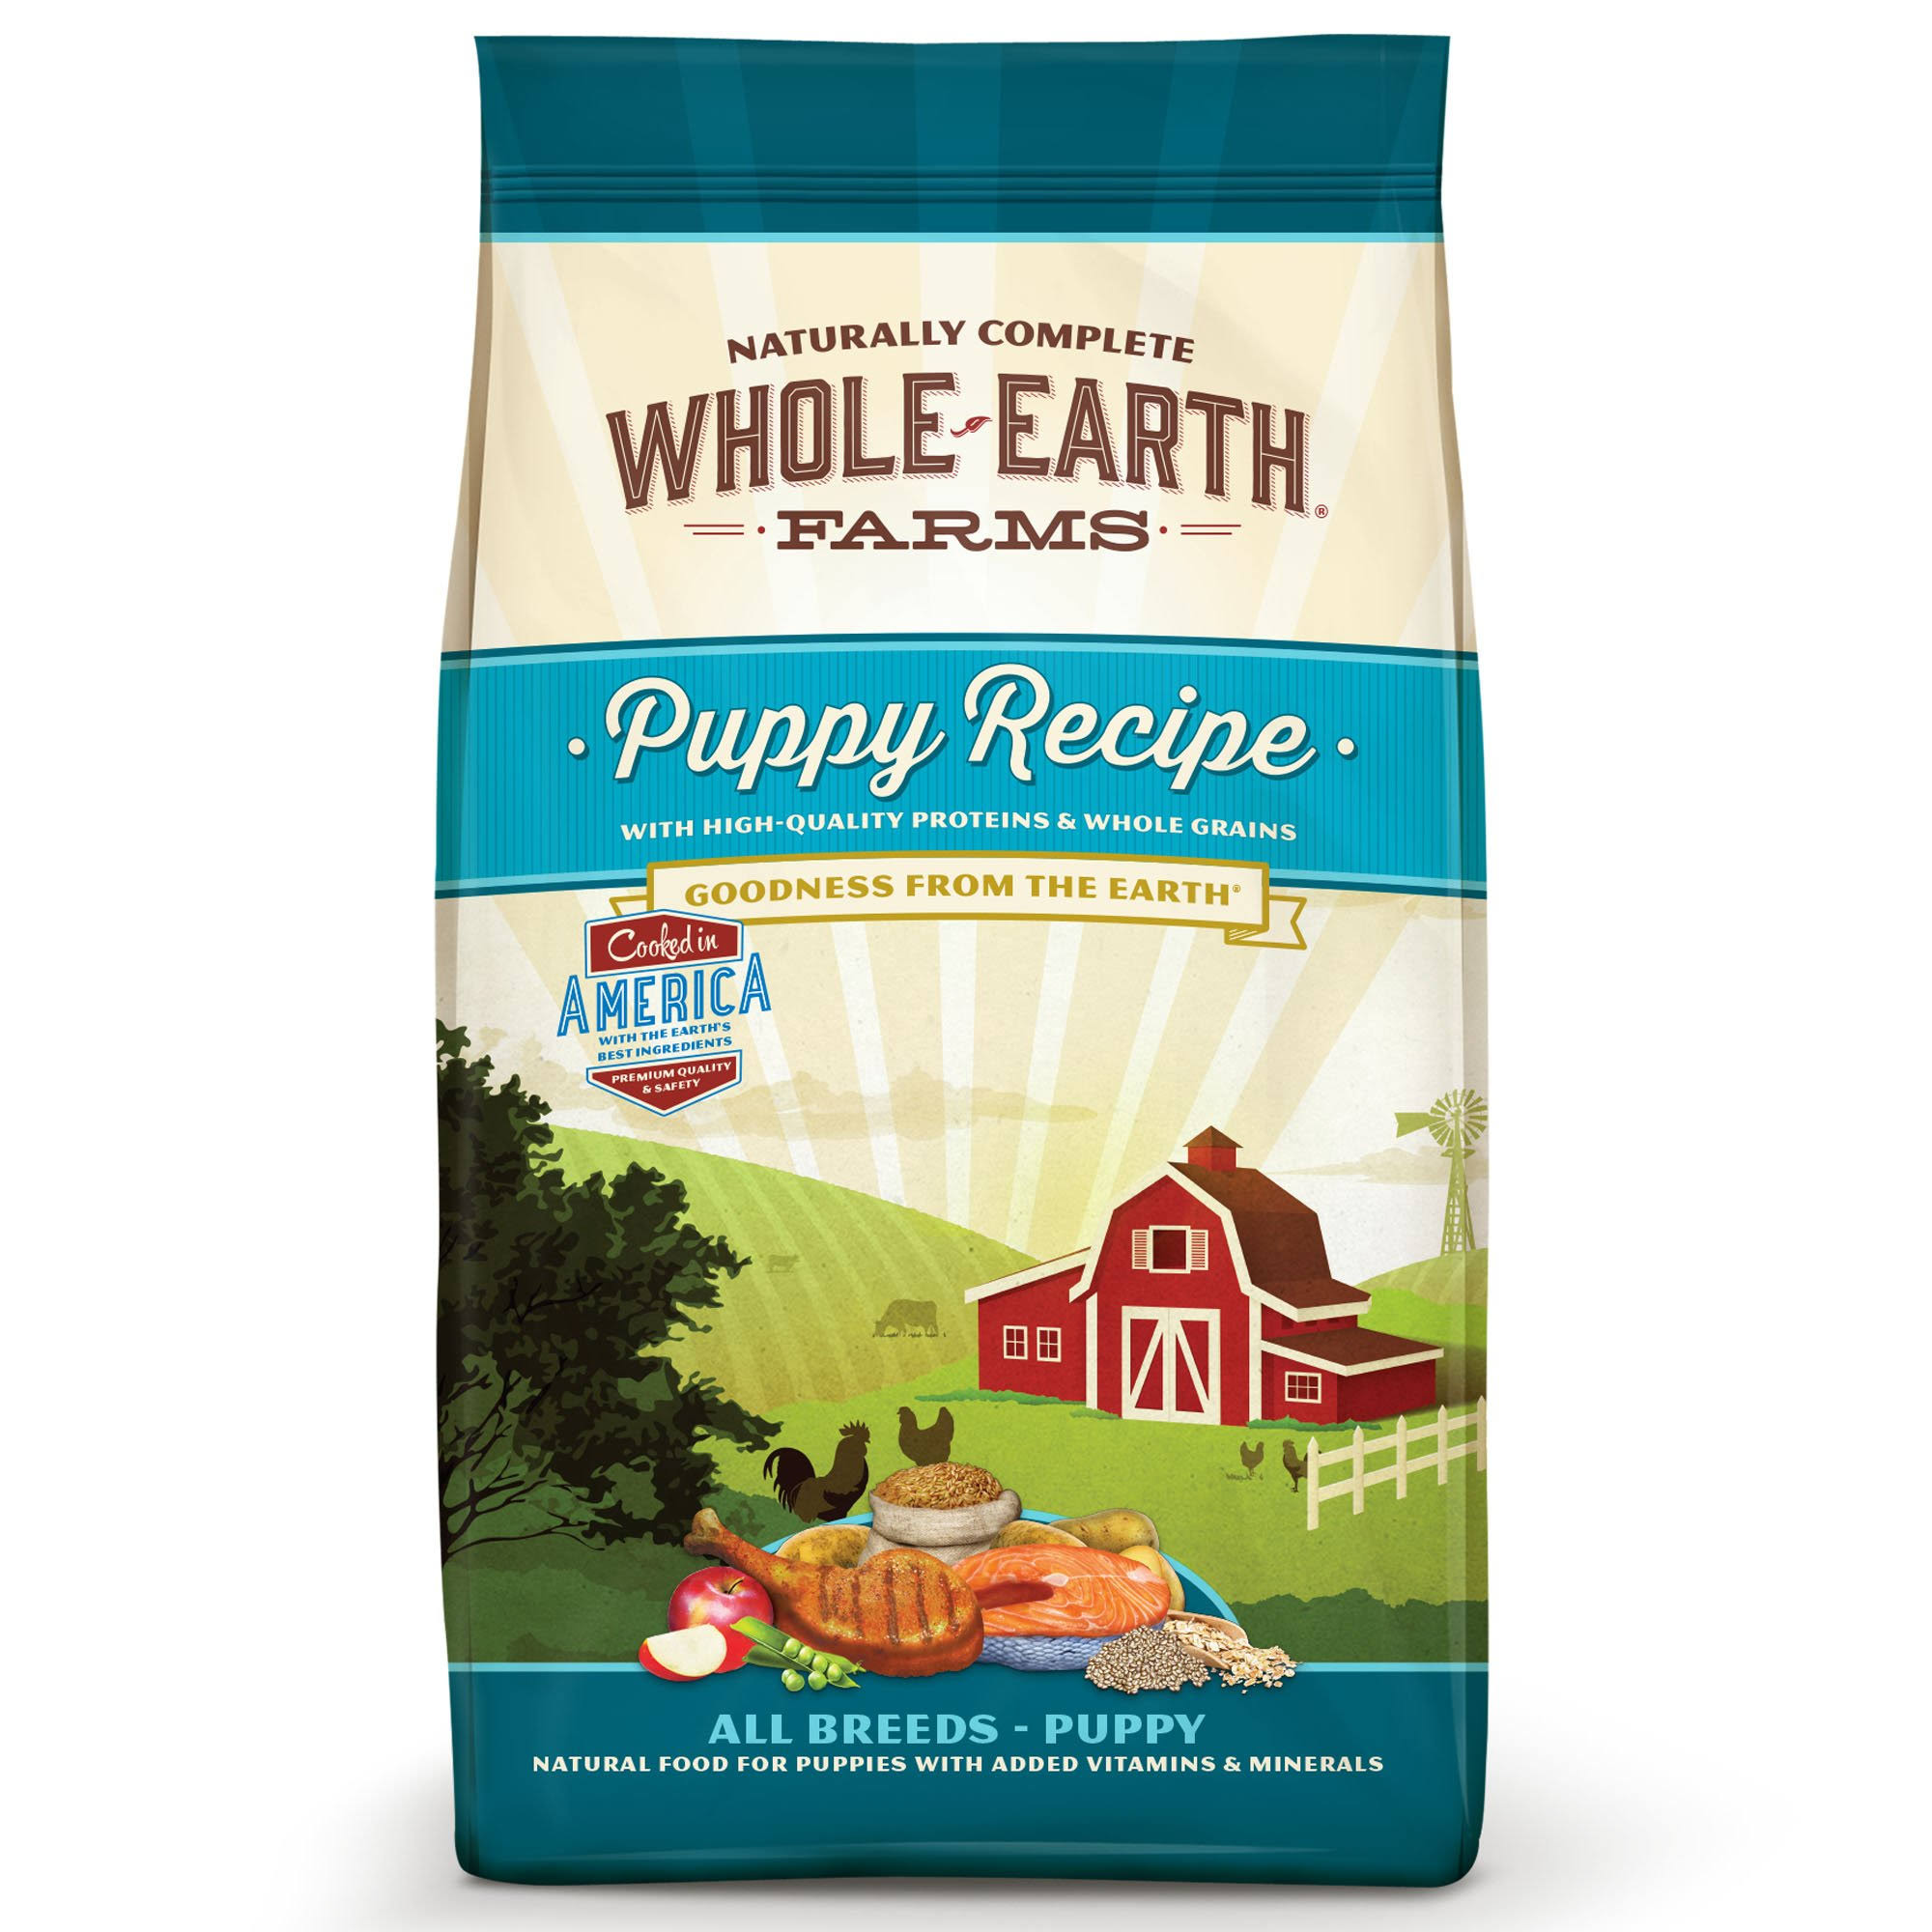 Whole Earth Farms - Puppy Recipe Dry Dog Food (4 lb)